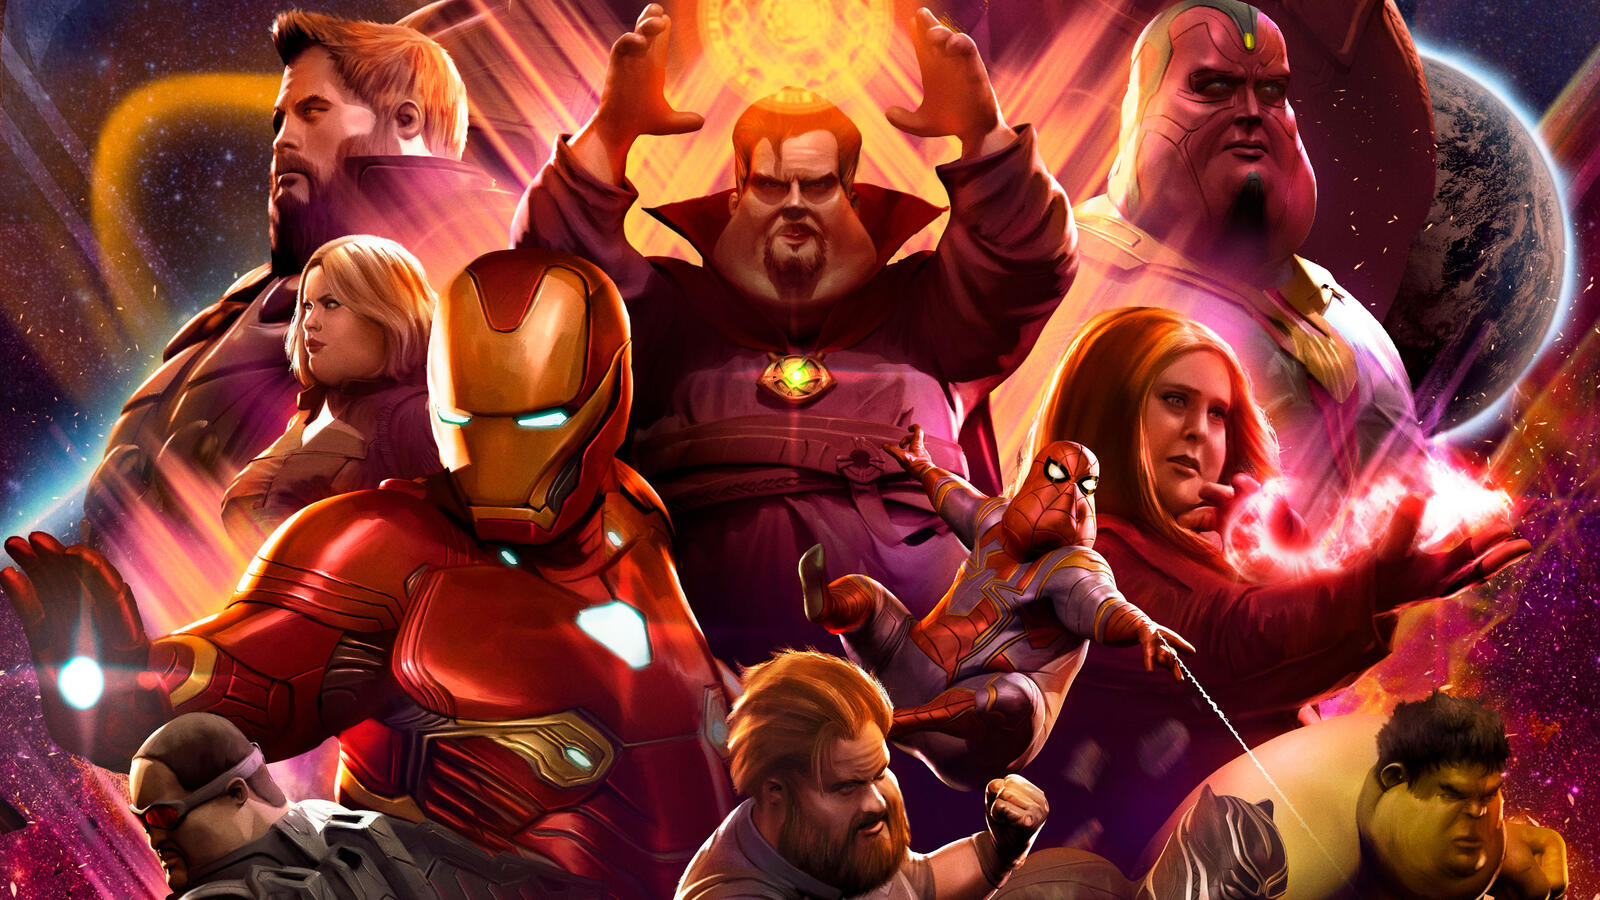 Wallpapers avengers infinity war Behance artwork on the desktop